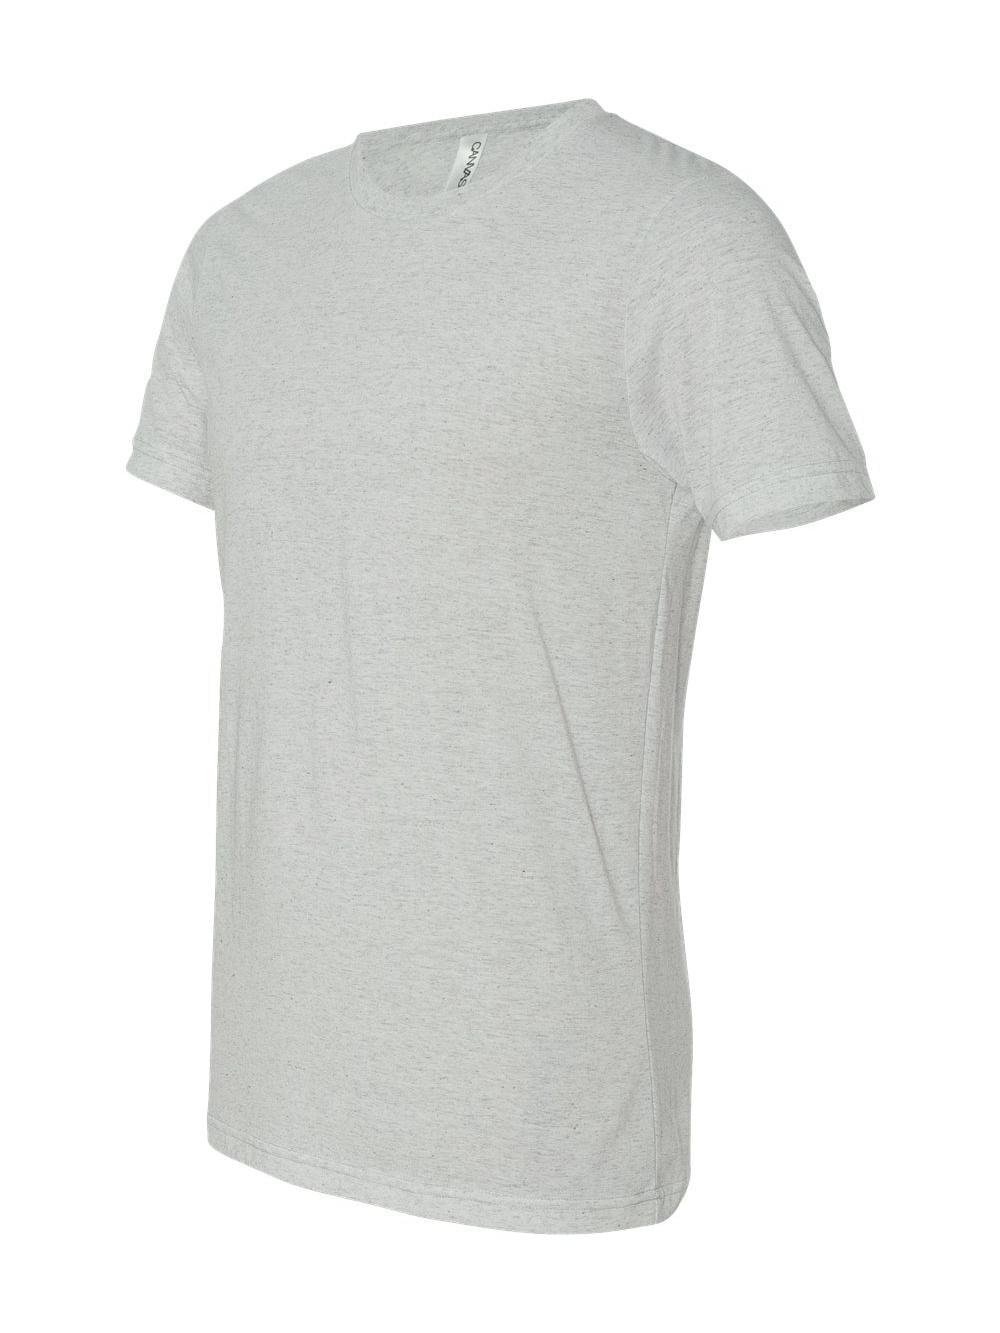 Unisex Triblend T-Shirt - OATMEAL TRIBLEND - 2XL | T-Shirts